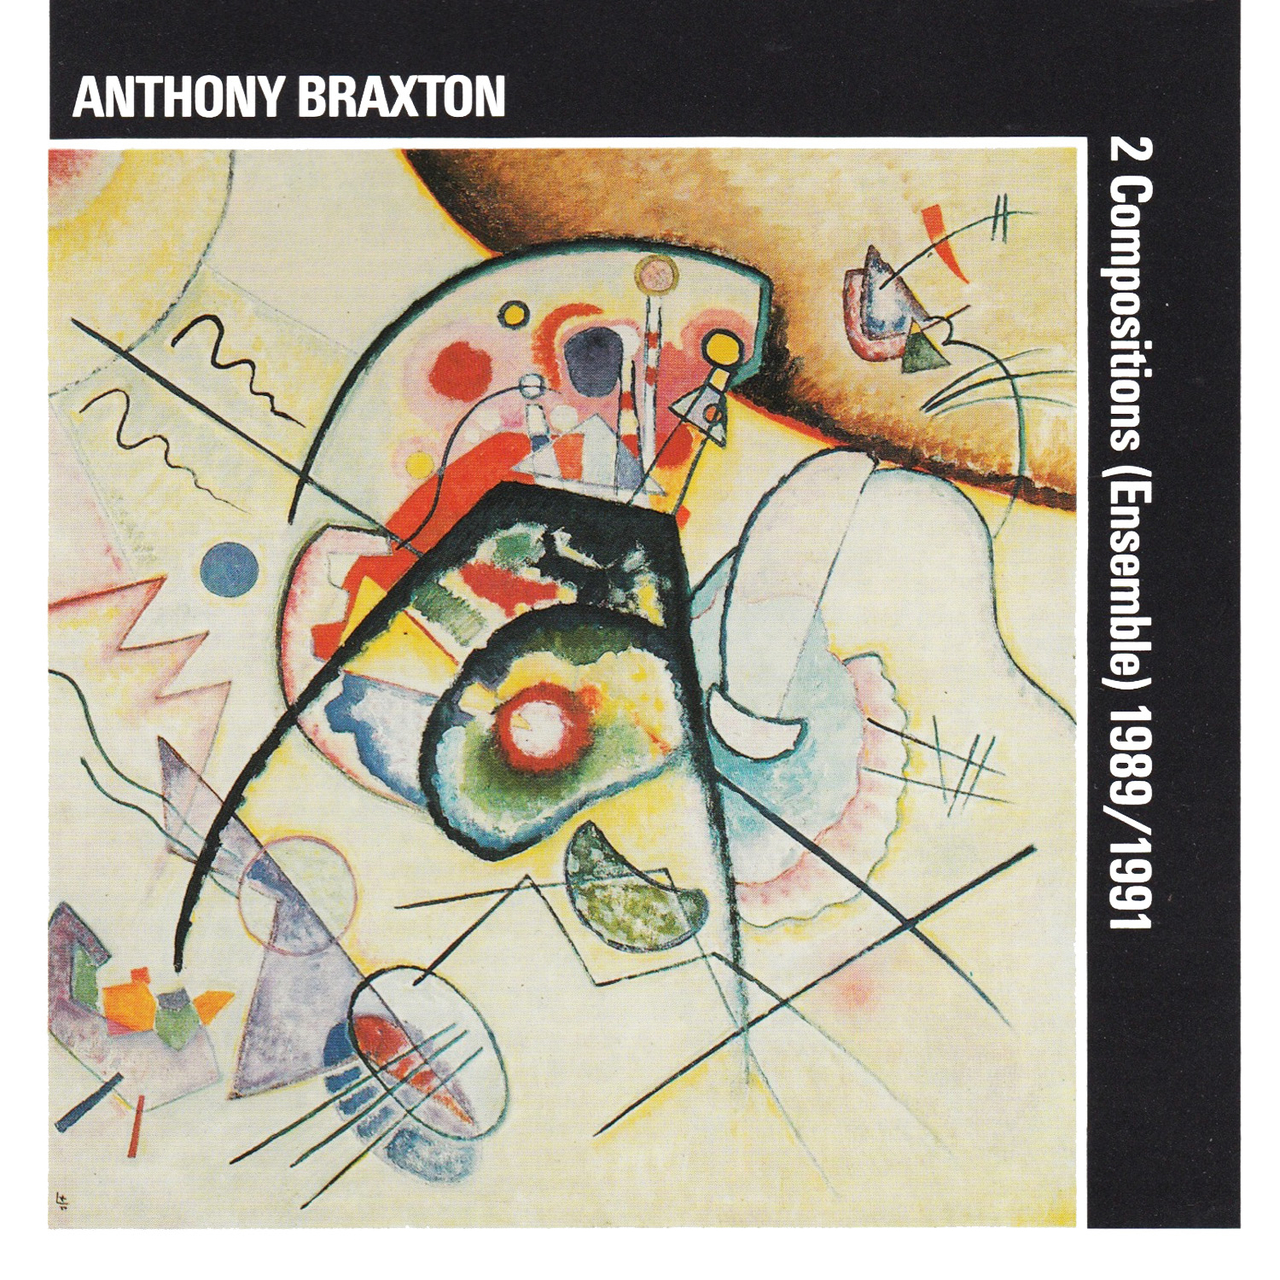 Anthony Braxton- 2 Compositions (Ensemble) 1989-19 [2015]